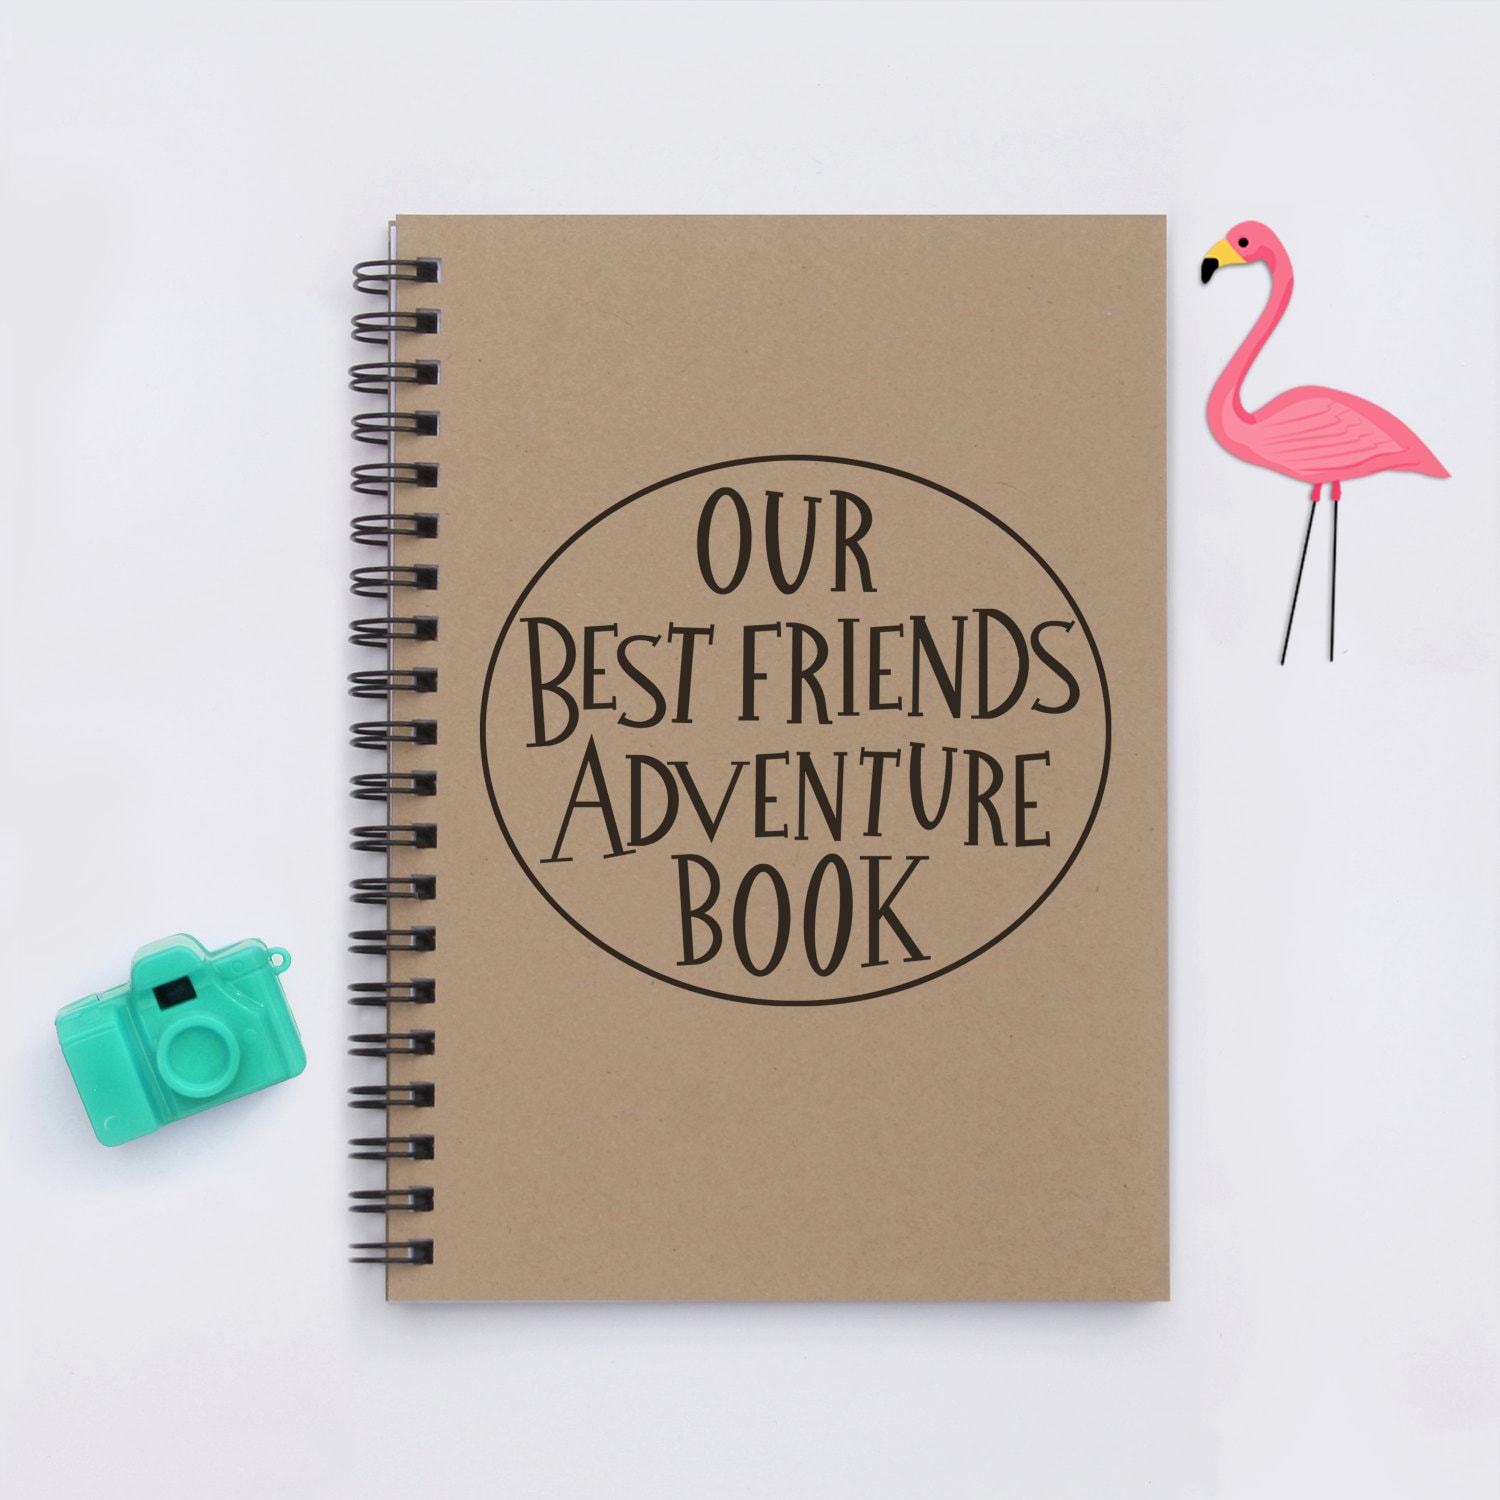 Books and friends. The best friend book. Best friends Adventure. Our Adventure book стикер. Friendship book.